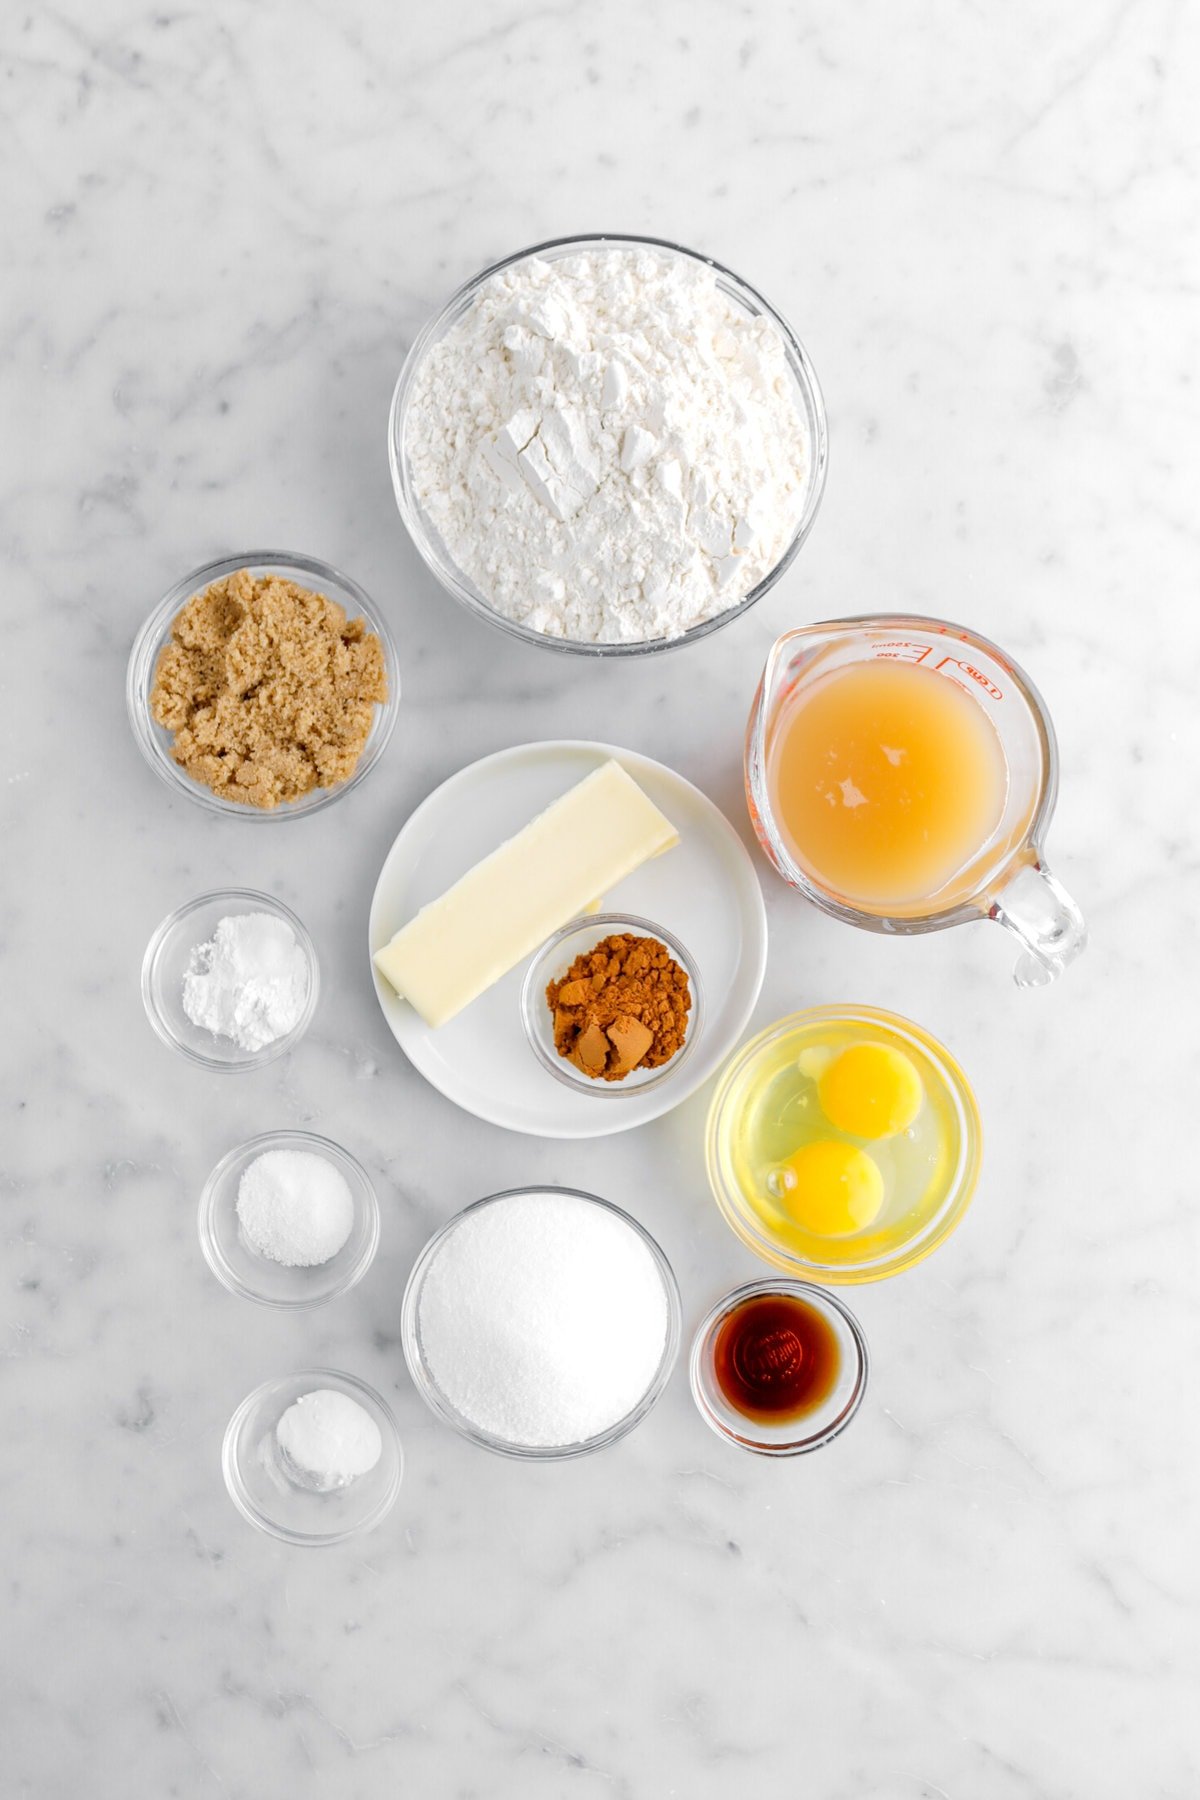 flour, brown sugar, apple cider, butter, ground spices, baking powder, baking soda, granulated sugar, vanilla, and salt on marble surface.